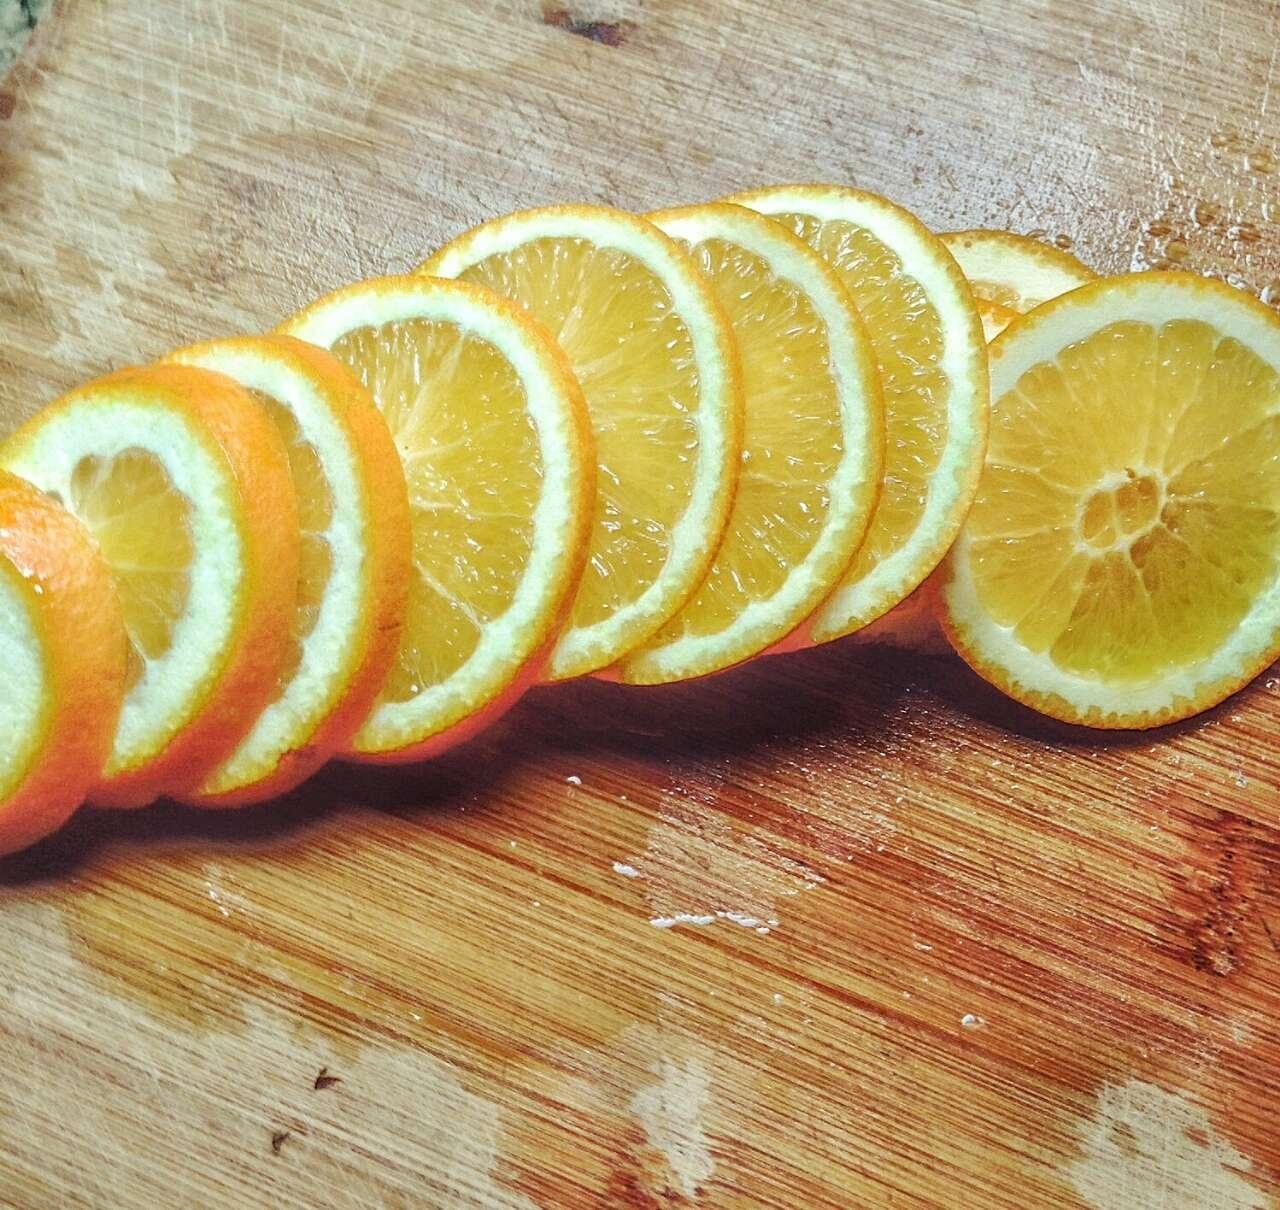 冰糖香橙